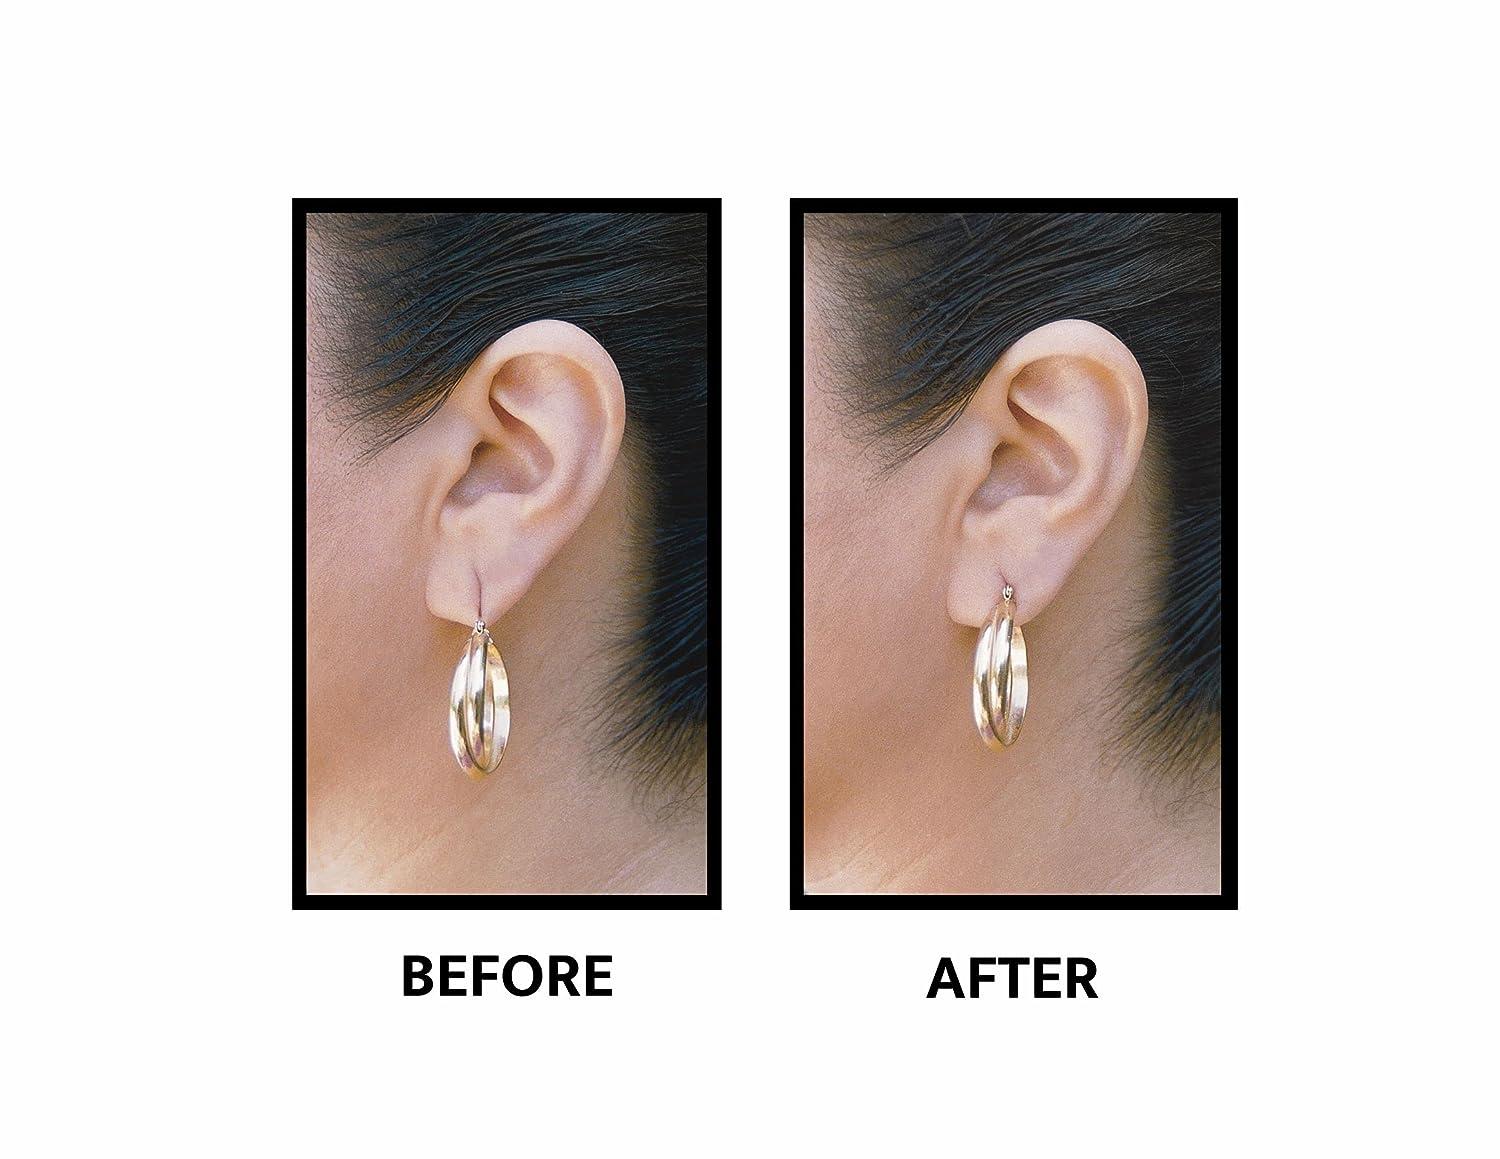 LOBE WONDER Ear Lobe Support Patches